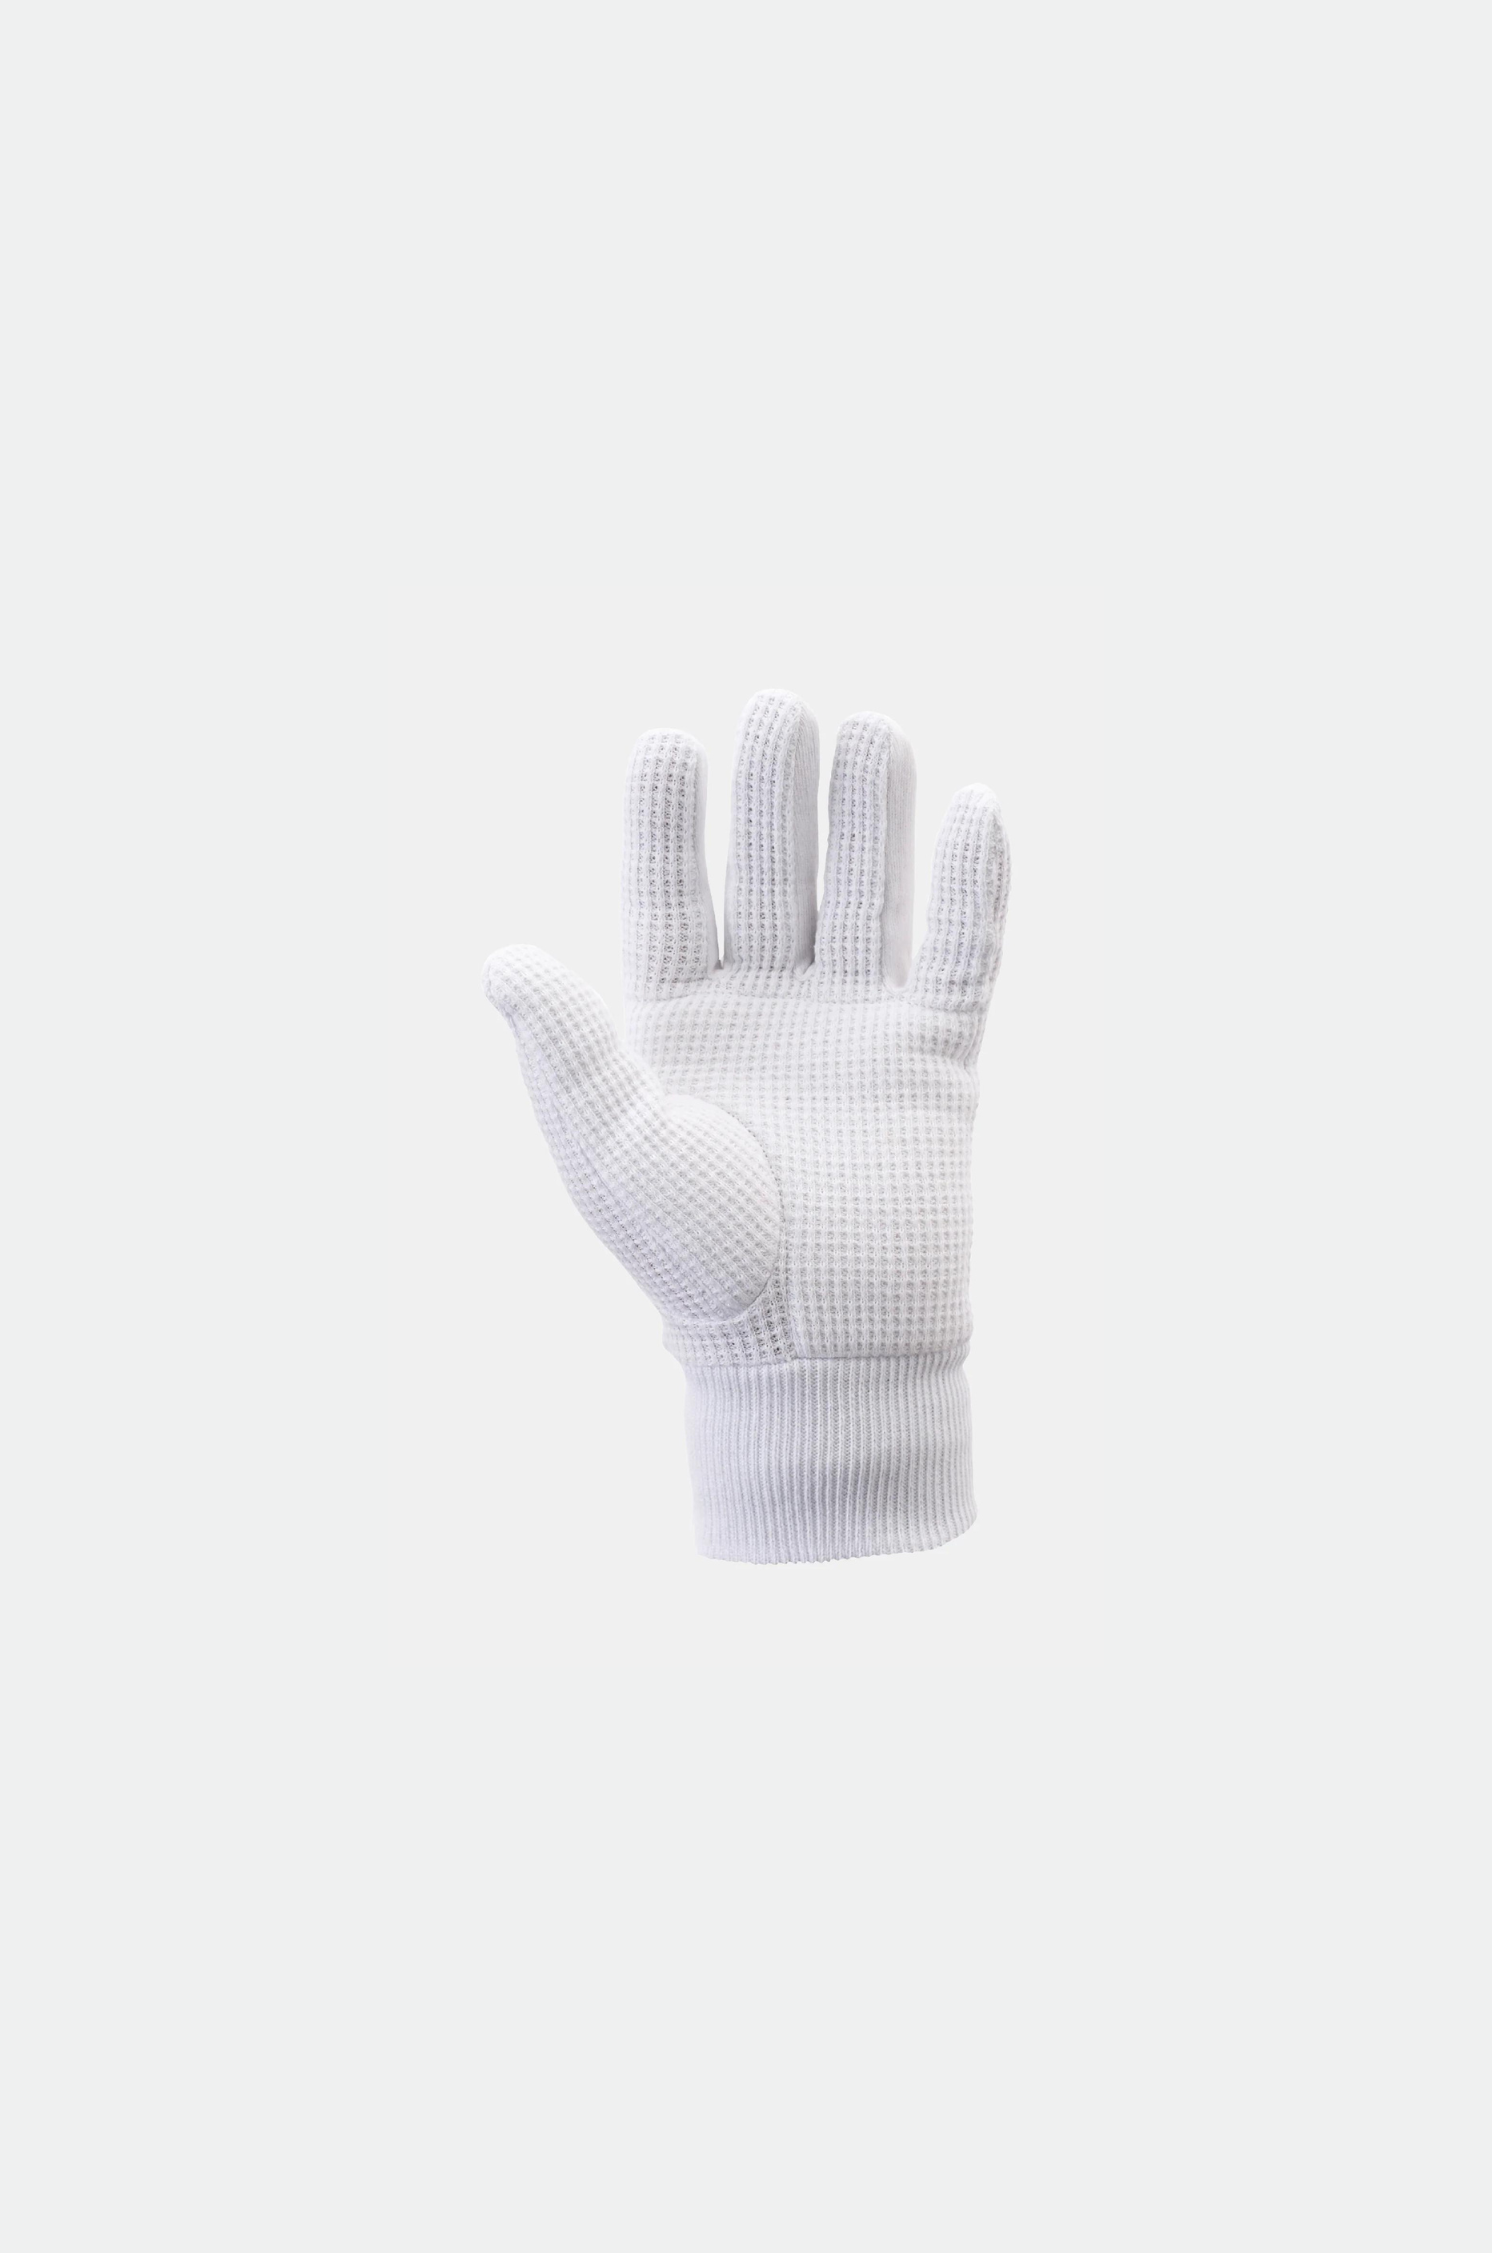 STING Air Weave Cotton Glove Inner White – STING Australiaᵀᴹ